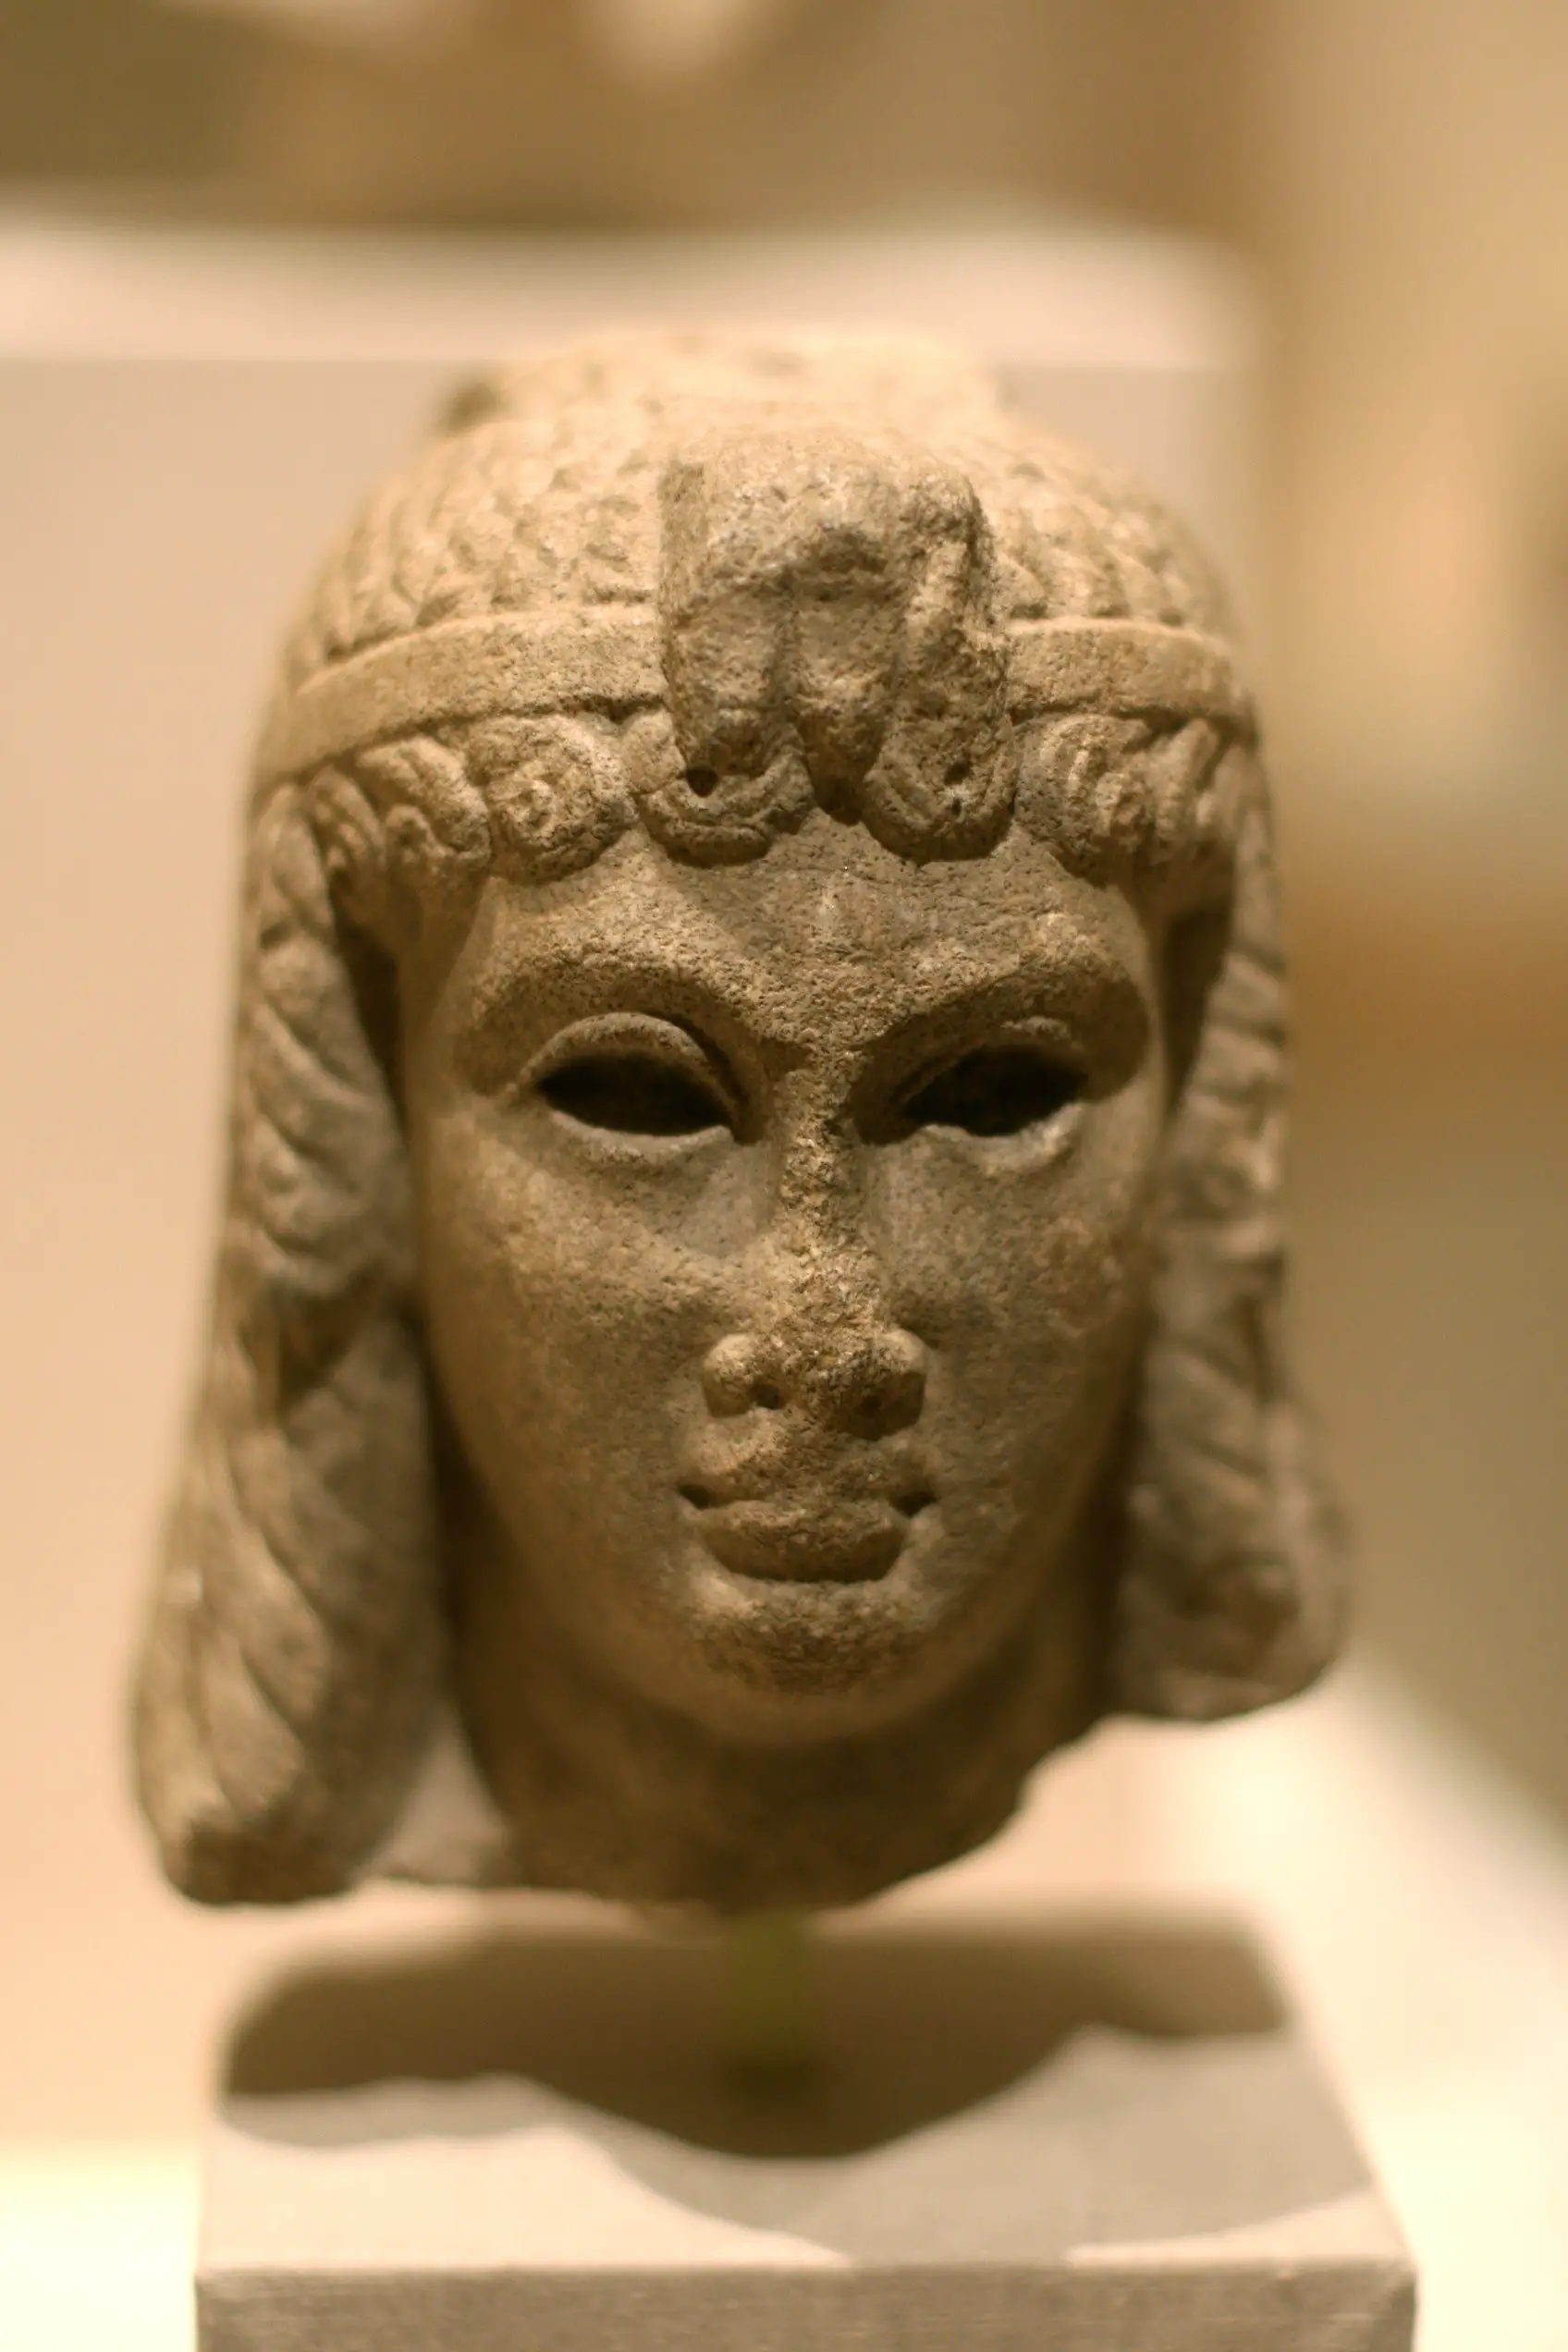 Historia de Cleopatra Selene II, hija de la reina Cleopatra VII Philopator y Marco Antonio